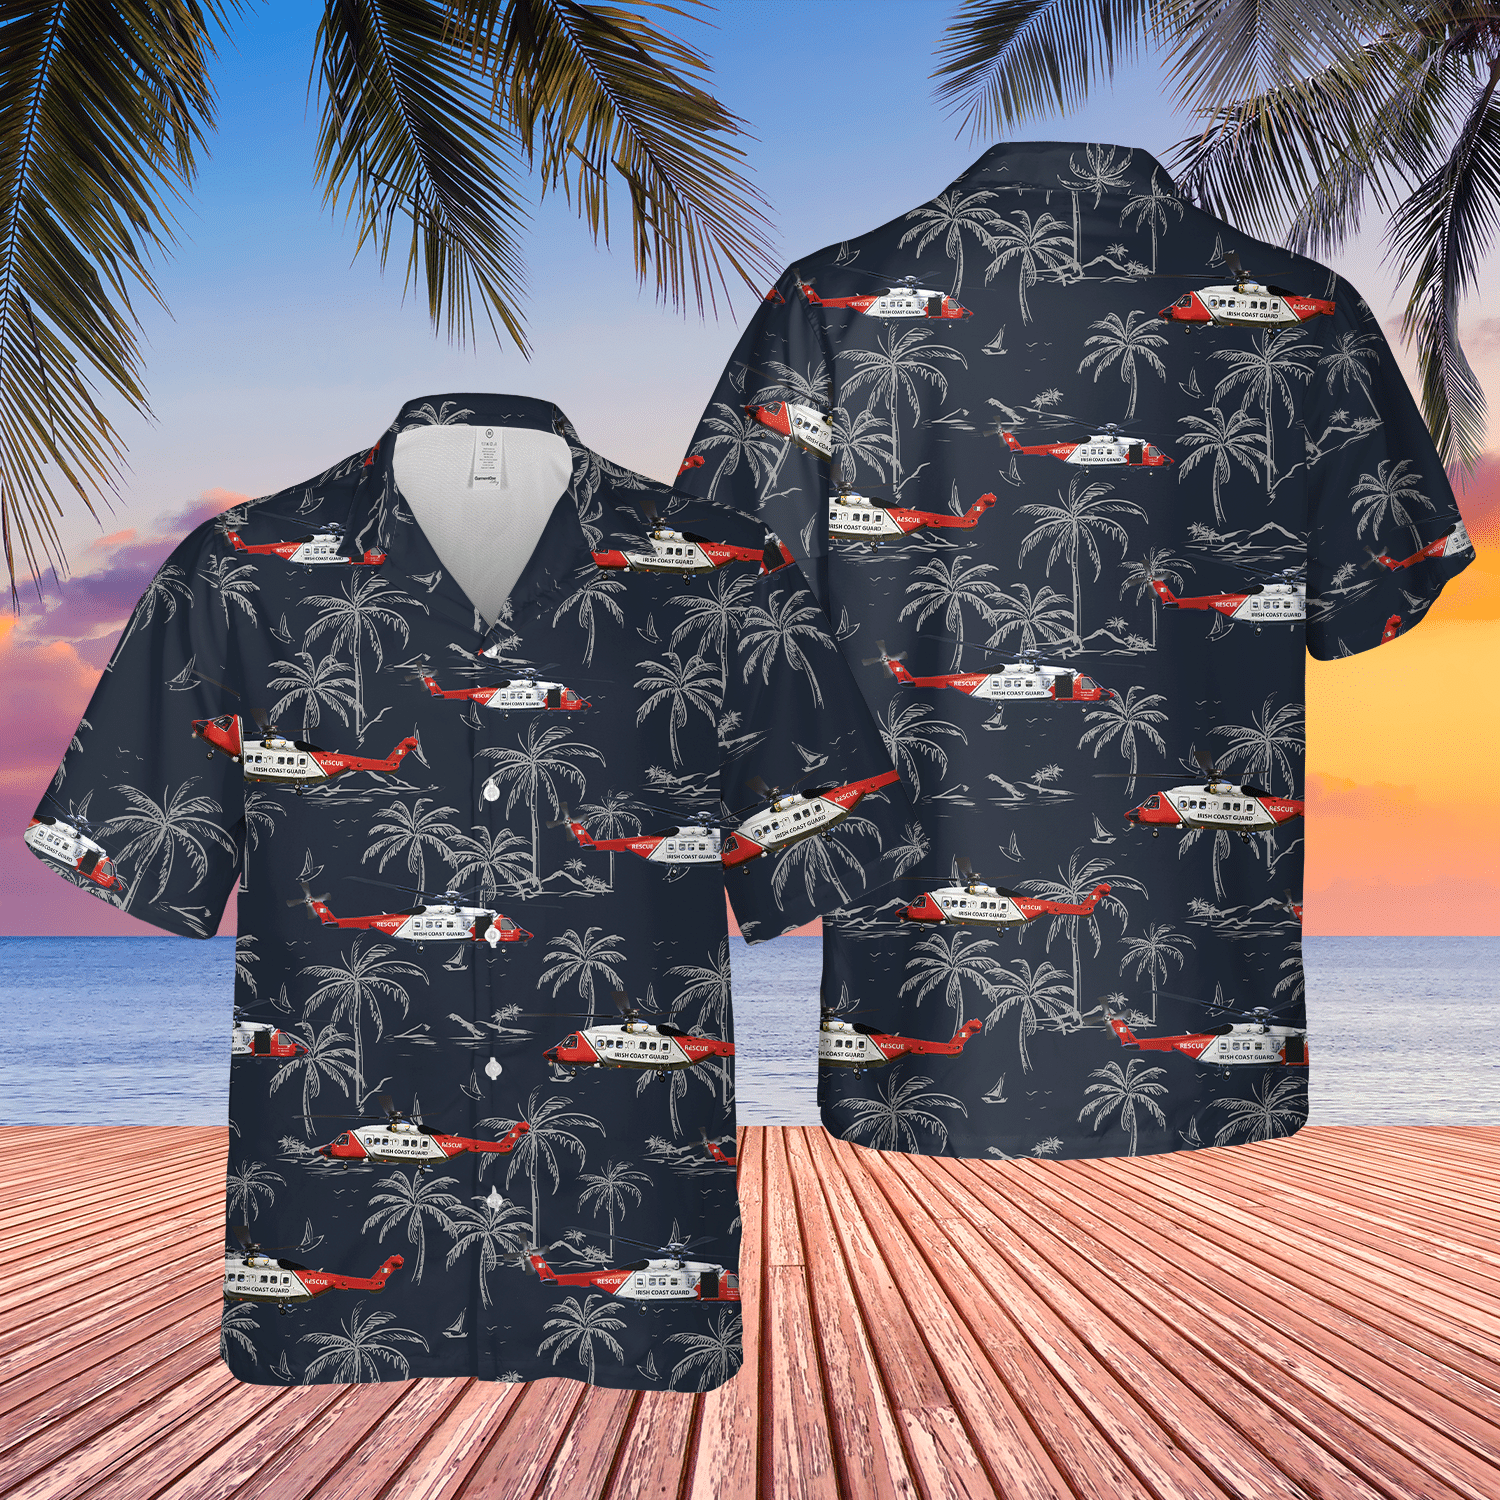 Enjoy your summer with top cool hawaiian shirt below 112